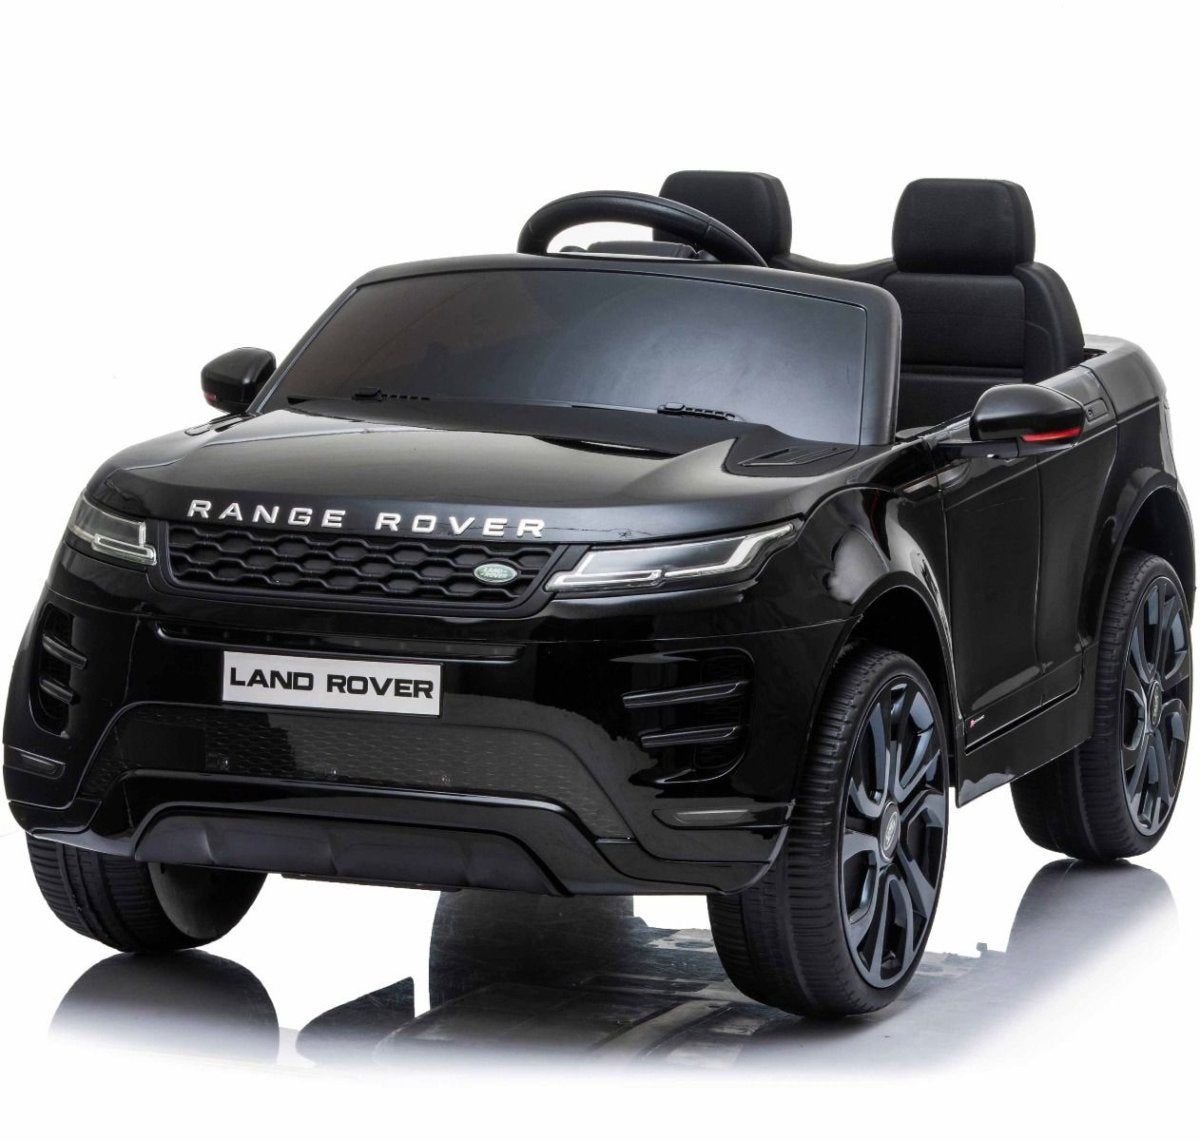 New Range Rover Evoque Models